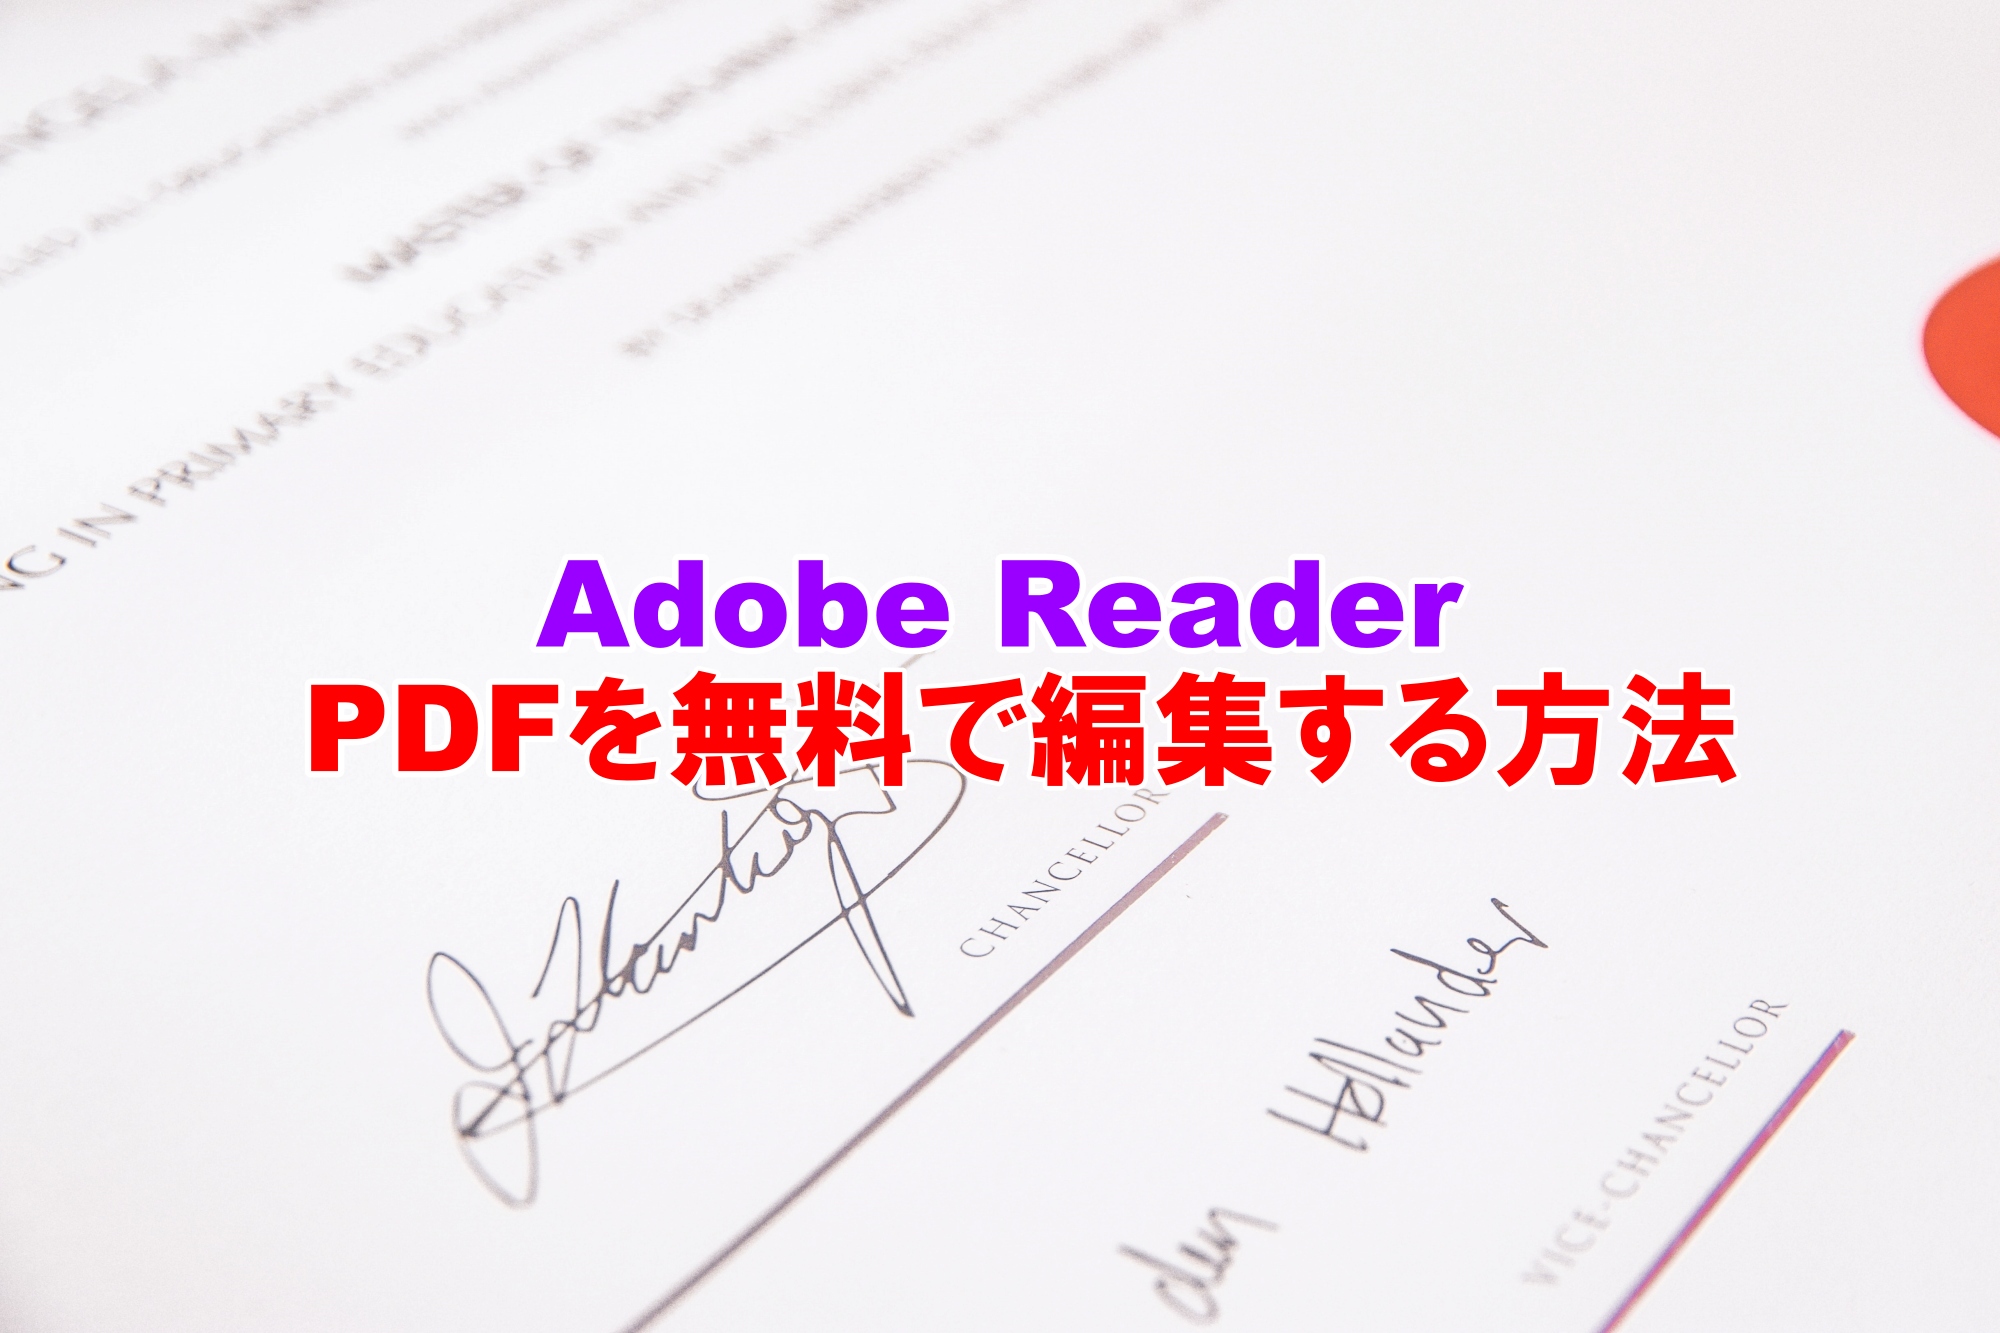 Adobe Acrobat Reader DC PDFファイルへの文字入力と電子印鑑押印の方法